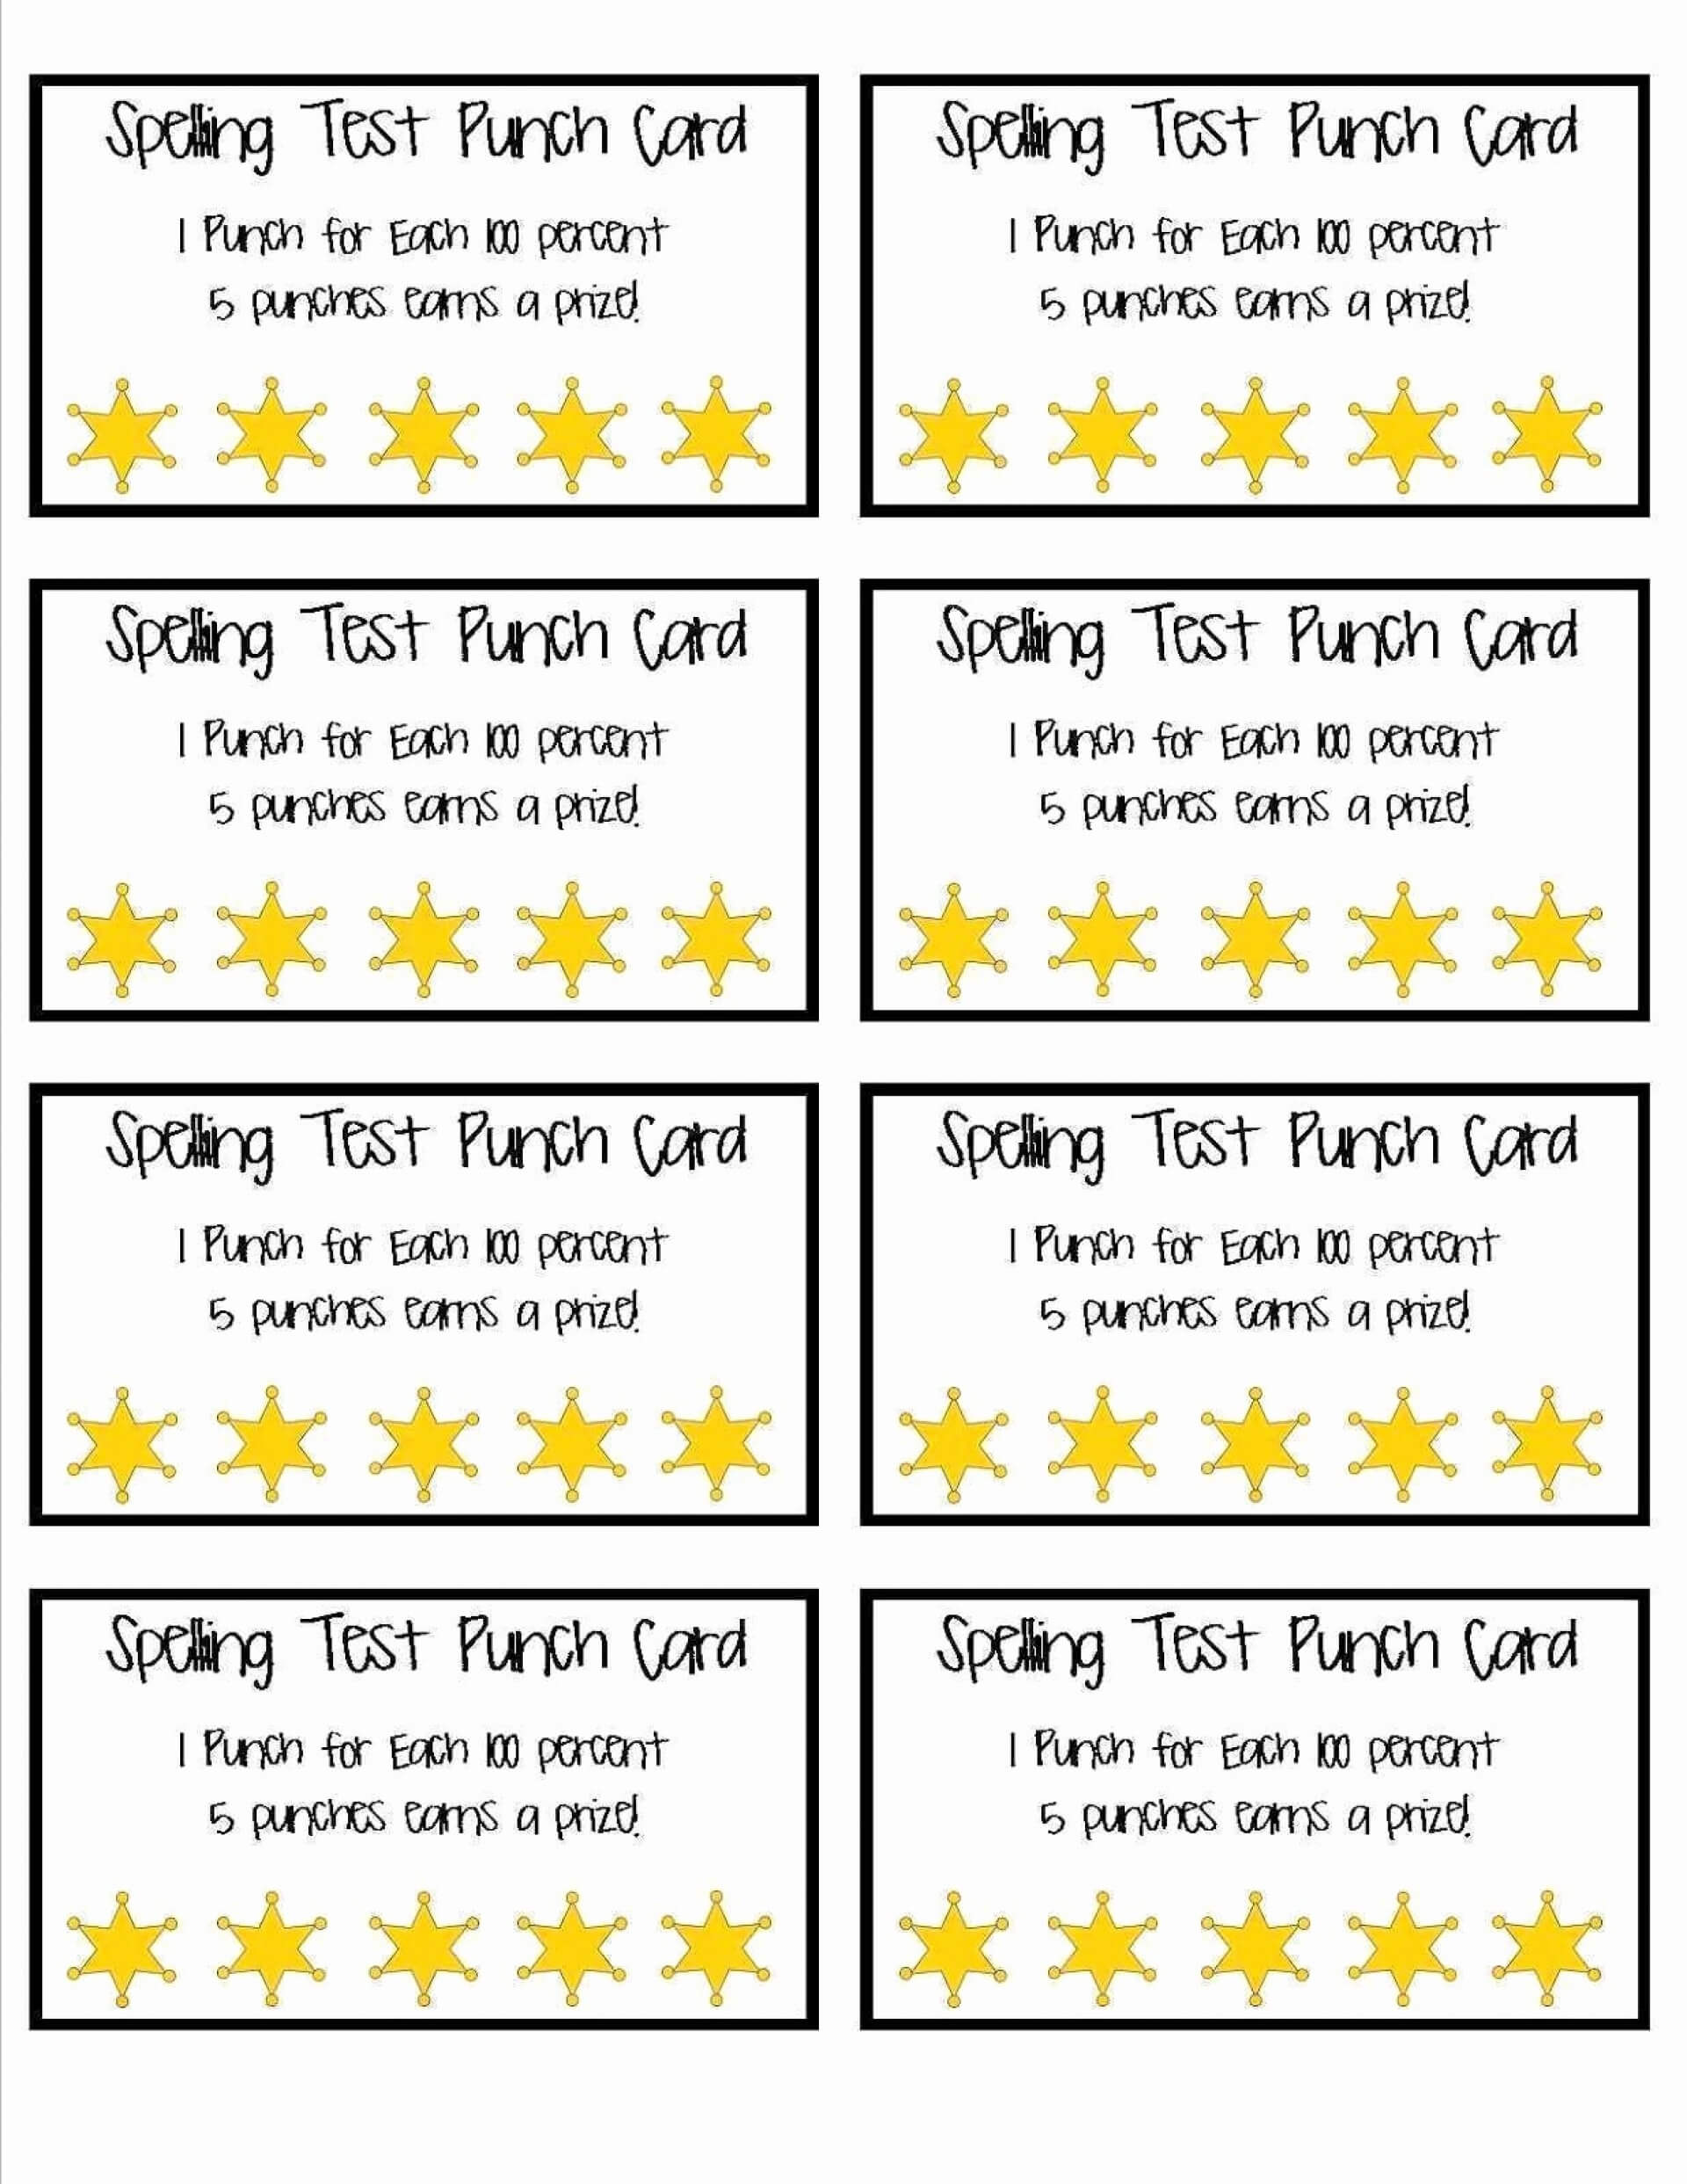 023 Template Ideas Behavior Punch Cards Pinterest Card Regarding Business Punch Card Template Free